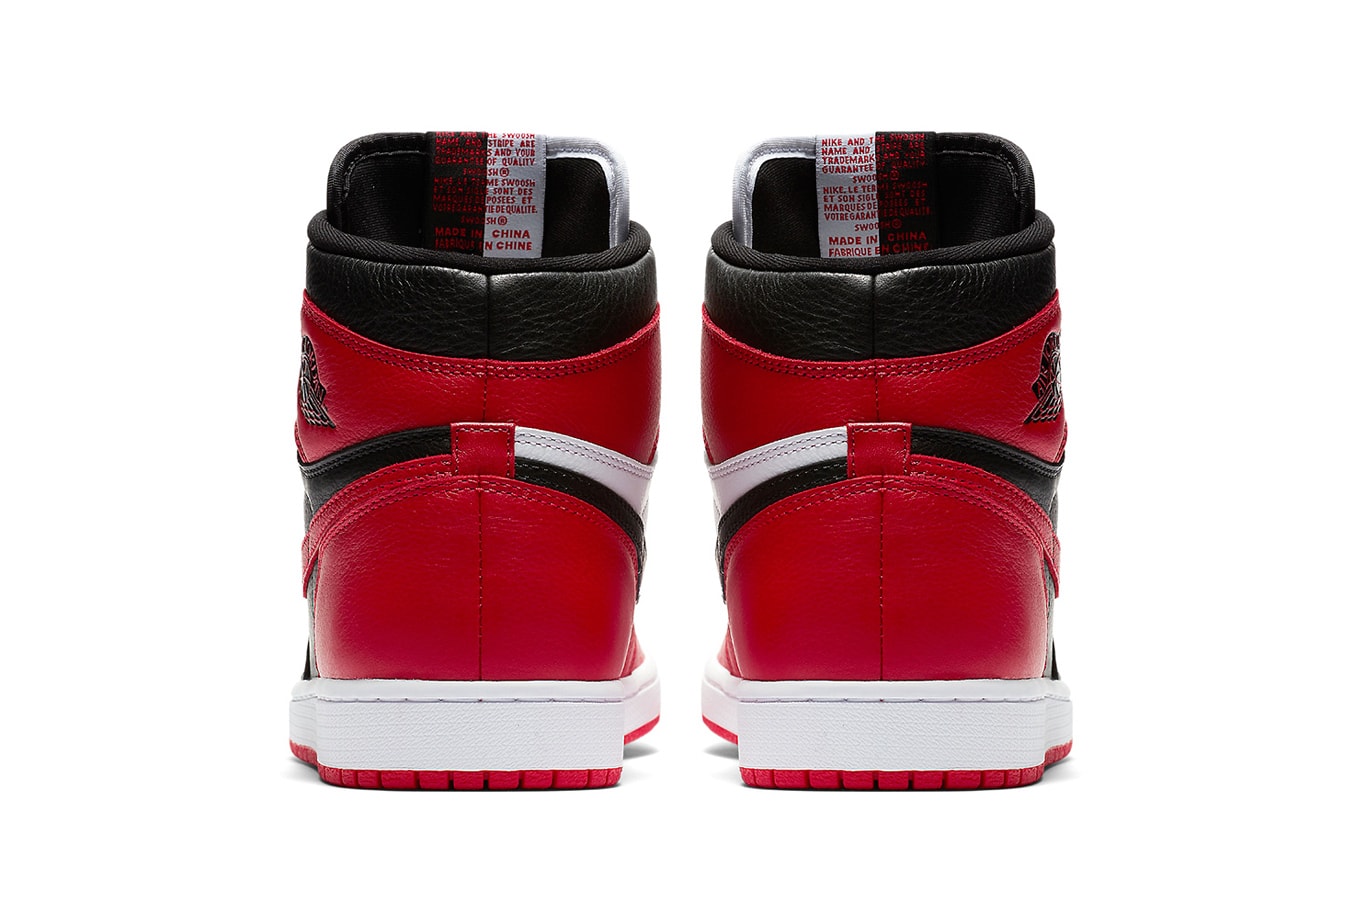 Air Jordan 1 Homage To Home Banned Chicago black red sneakers footwear release drop